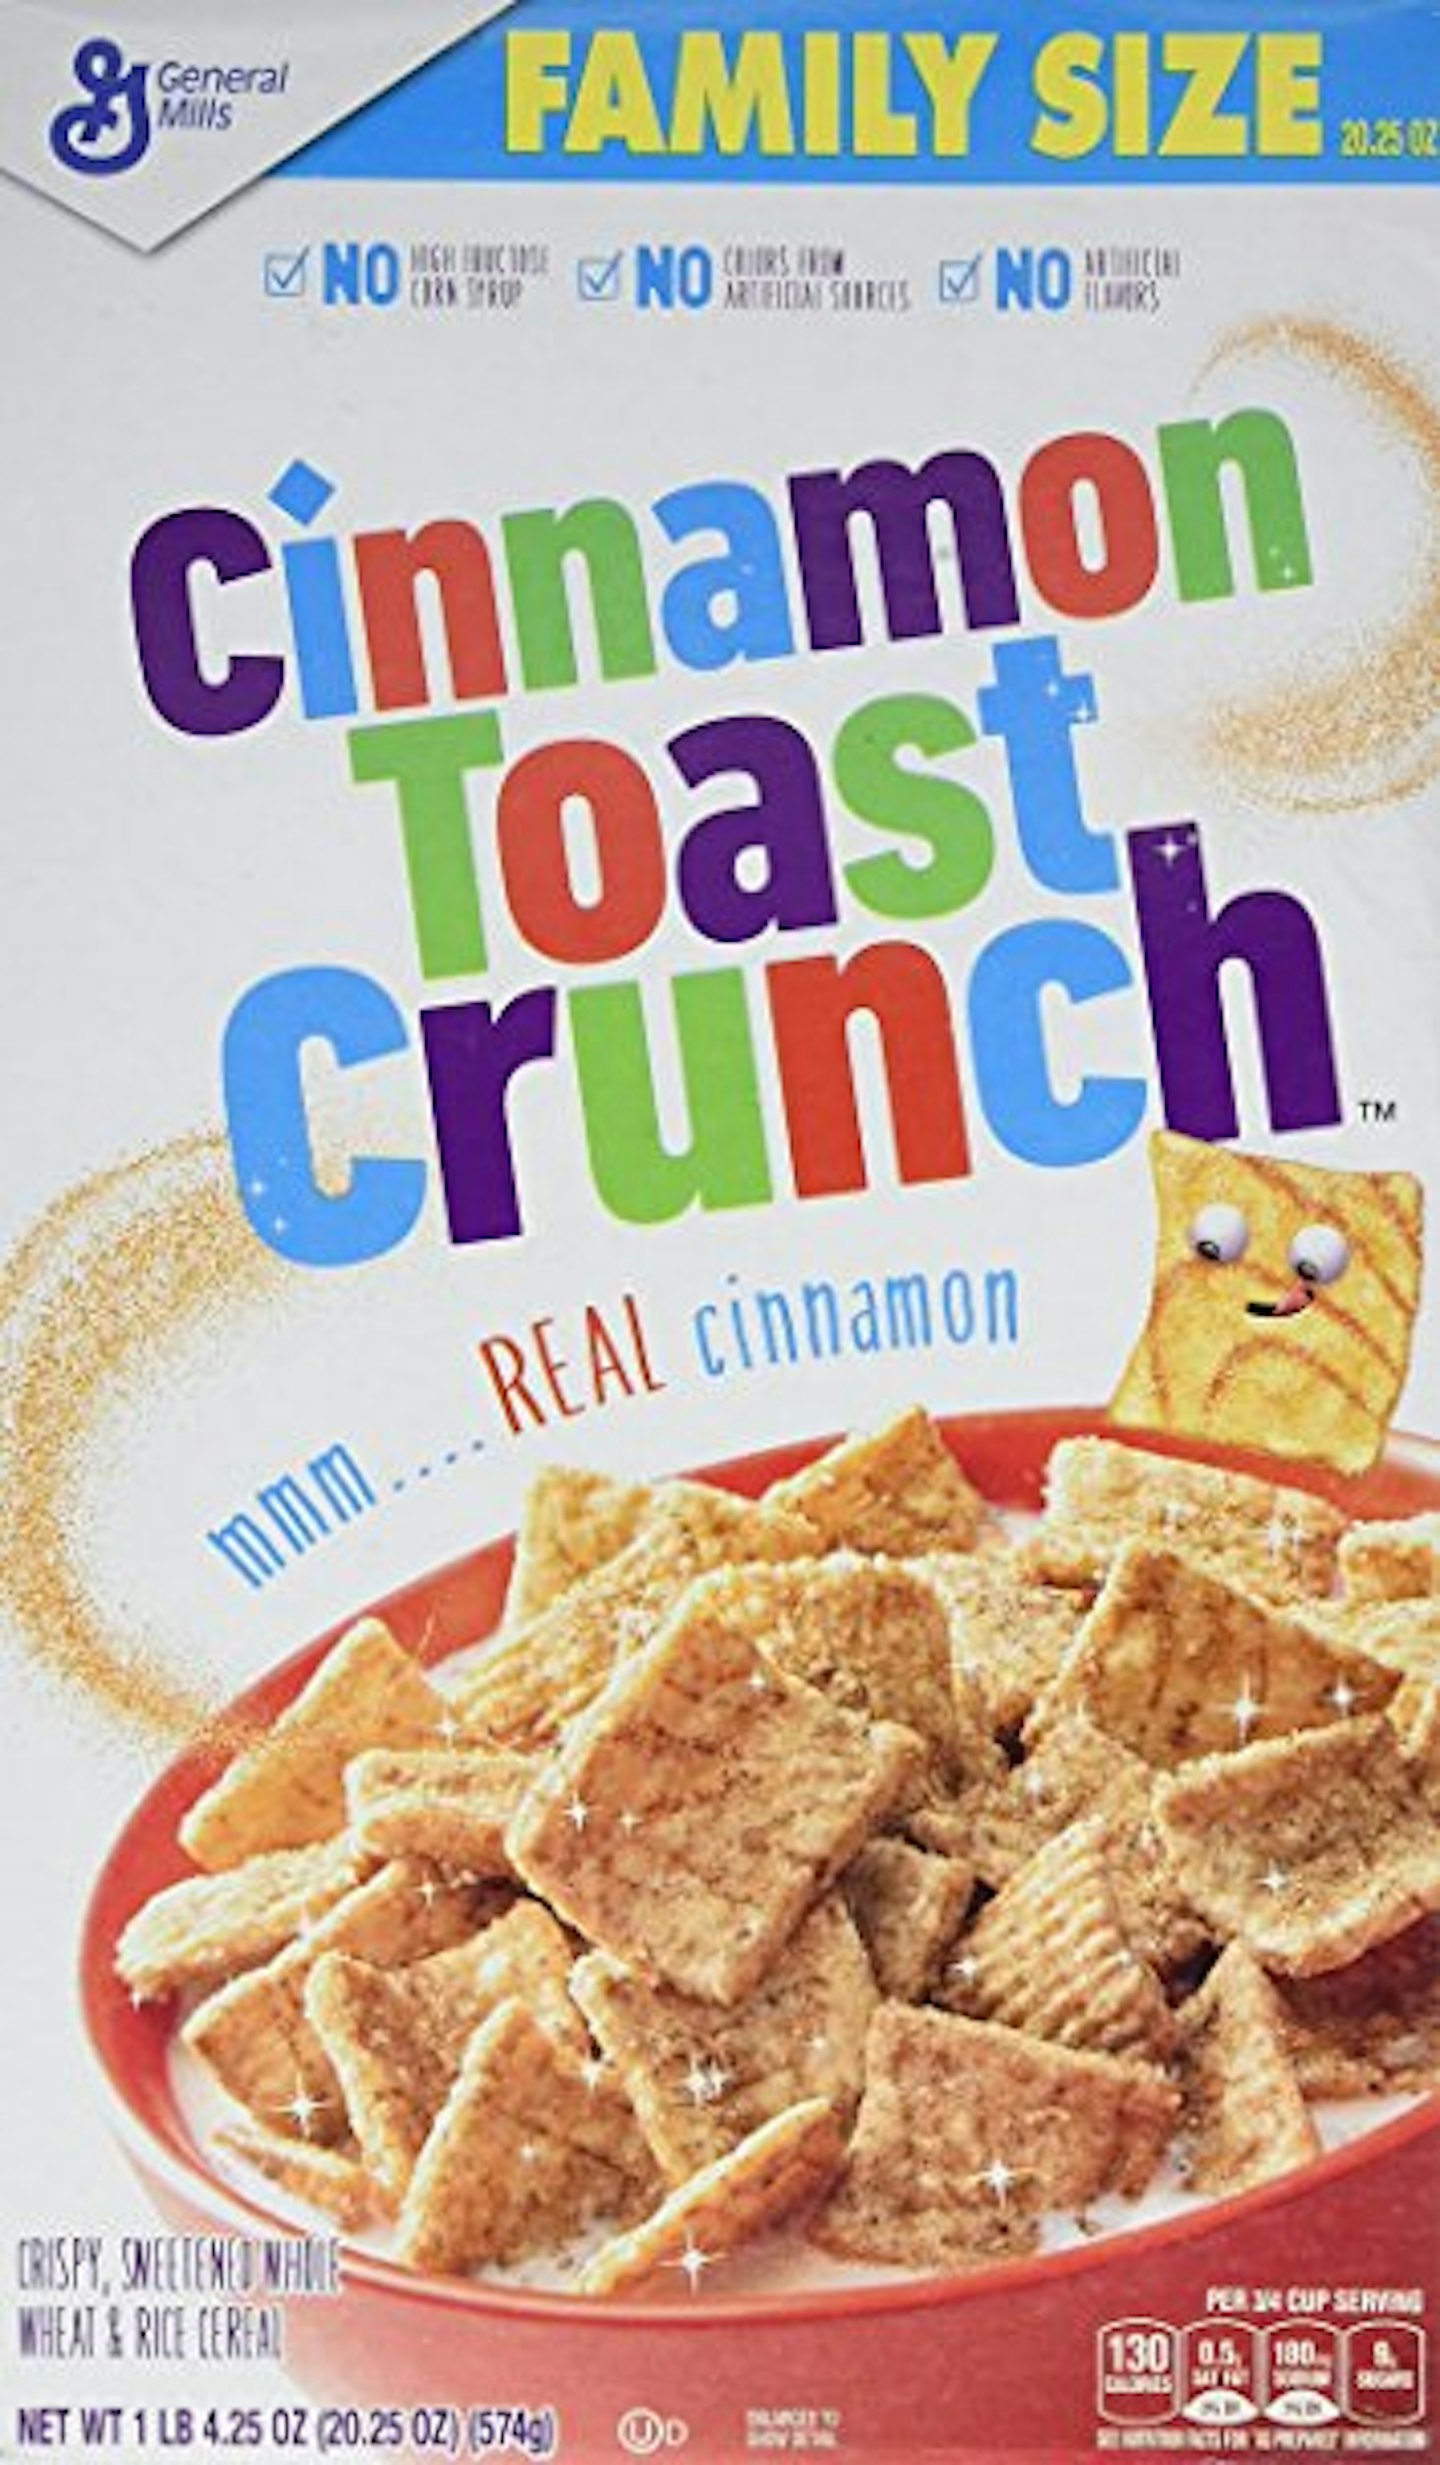 Discontinued cereals Cinnamon Toast Crunch